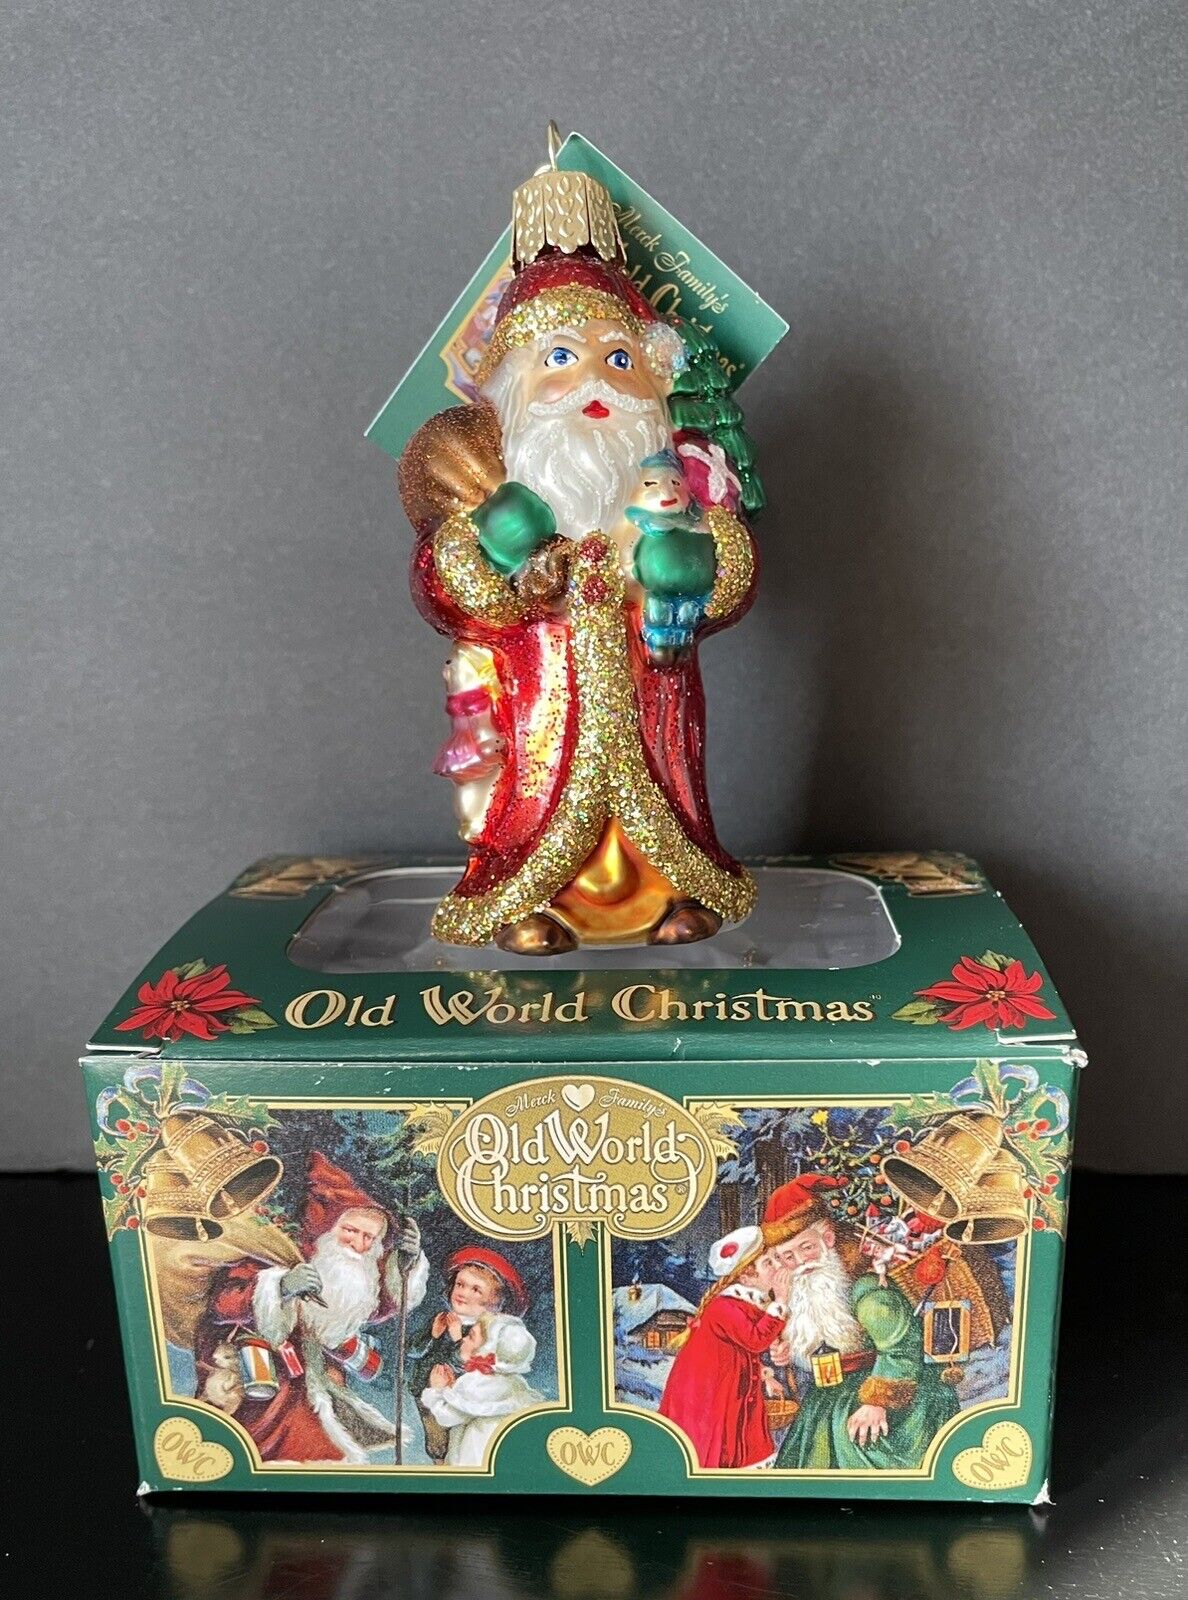 2001 Vintage Old World Santa Claus Christmas Holiday Figurine w/Original Box *